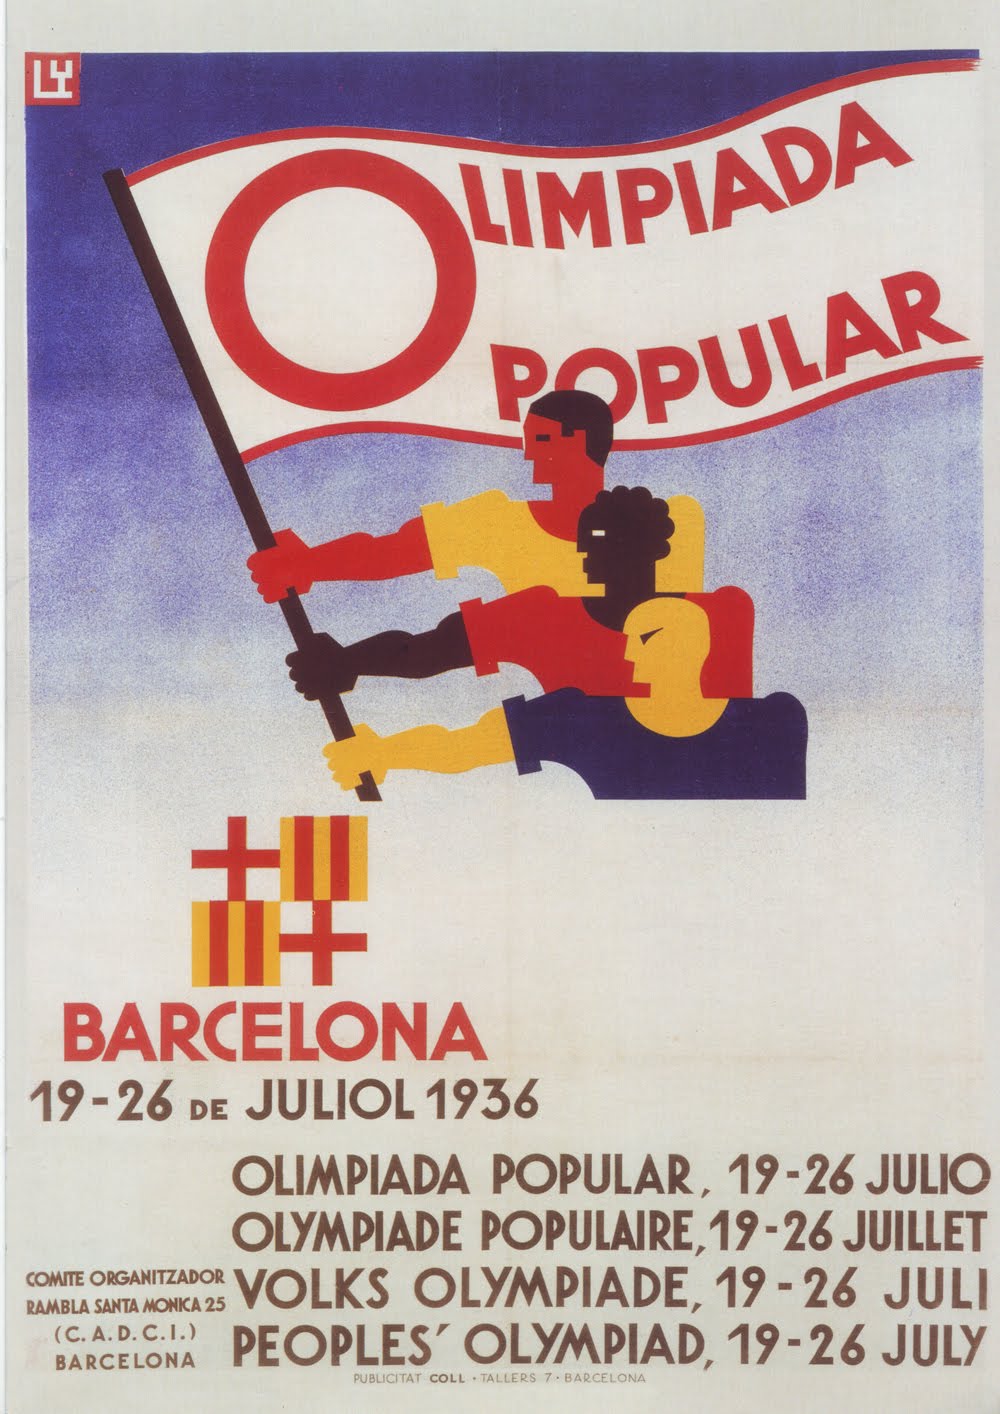 https://amec.files.wordpress.com/2012/07/cartel-guerra-olimpiada-popular-barcelona-juliol-1936-franz-lewy.jpg